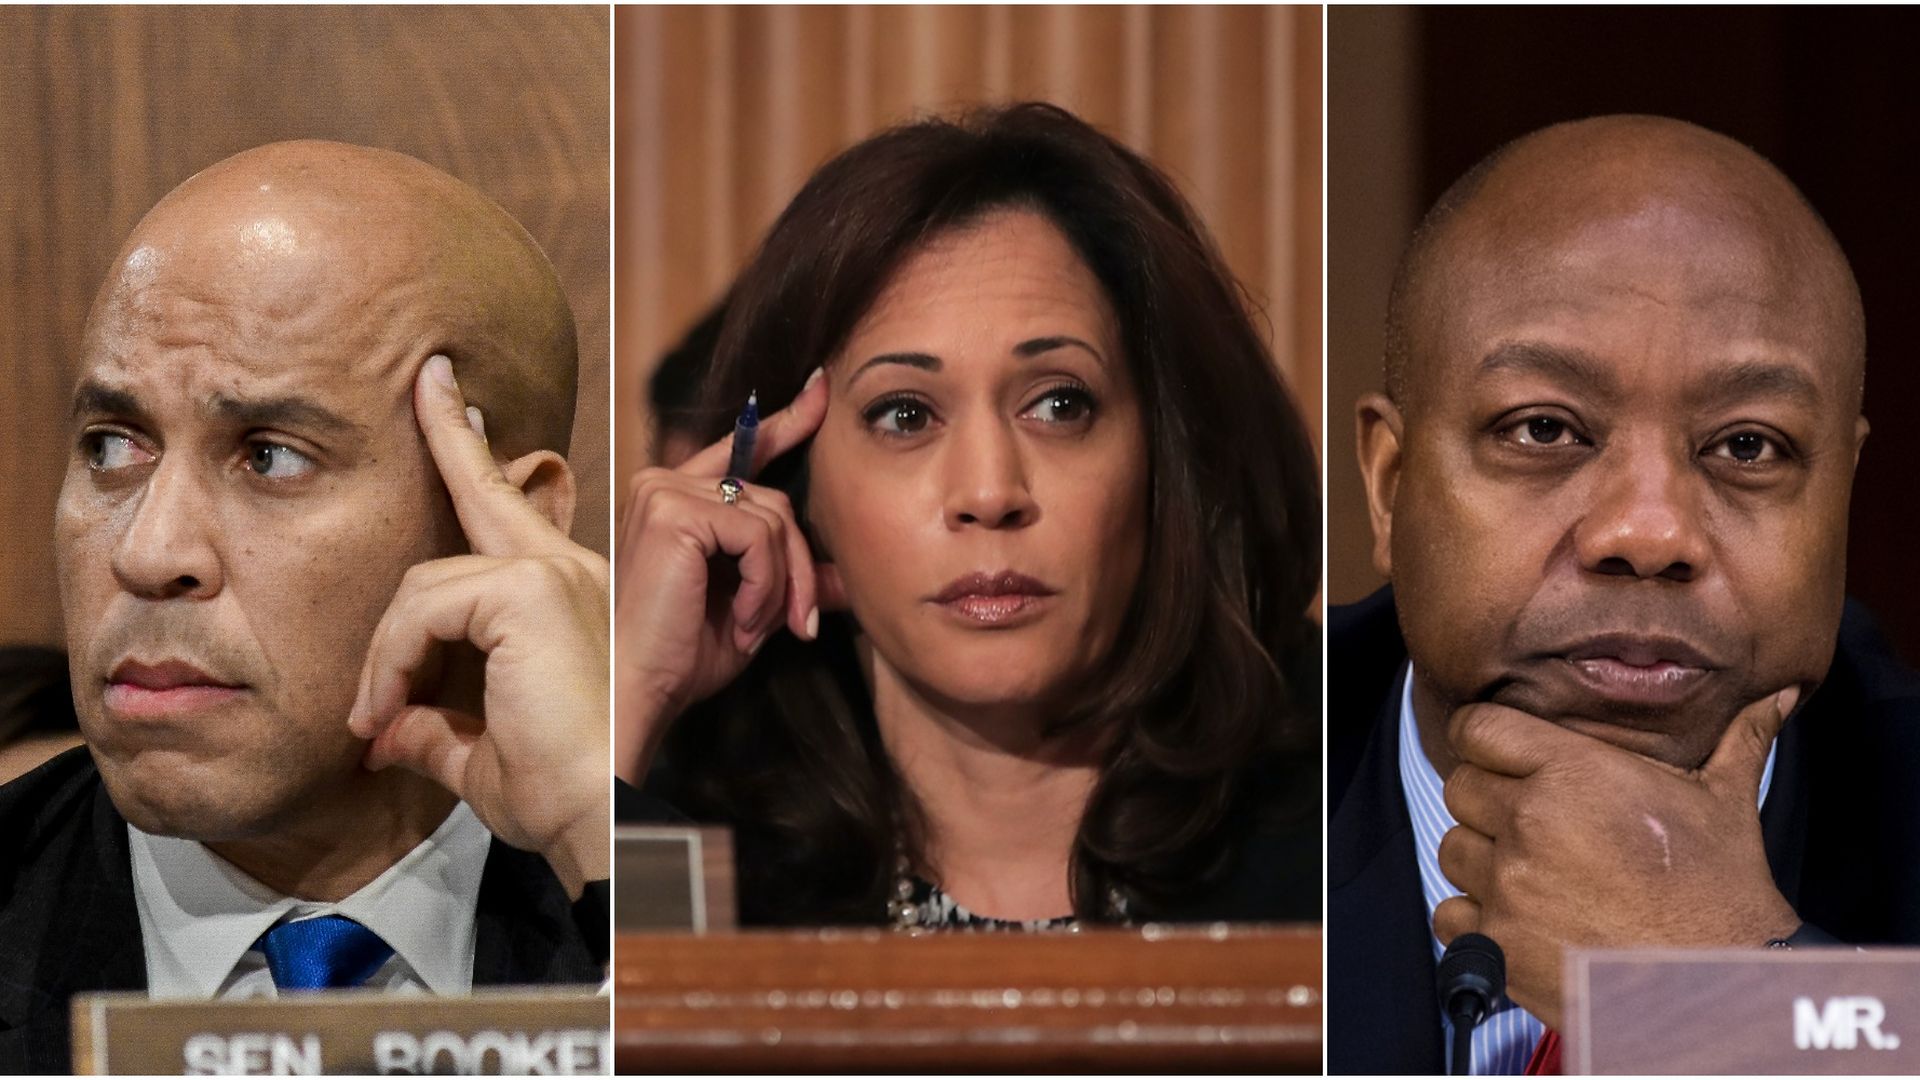 Senators Cory Booker, Kamala Harris, and Tim Scott in split screens lean their heads in their hands.